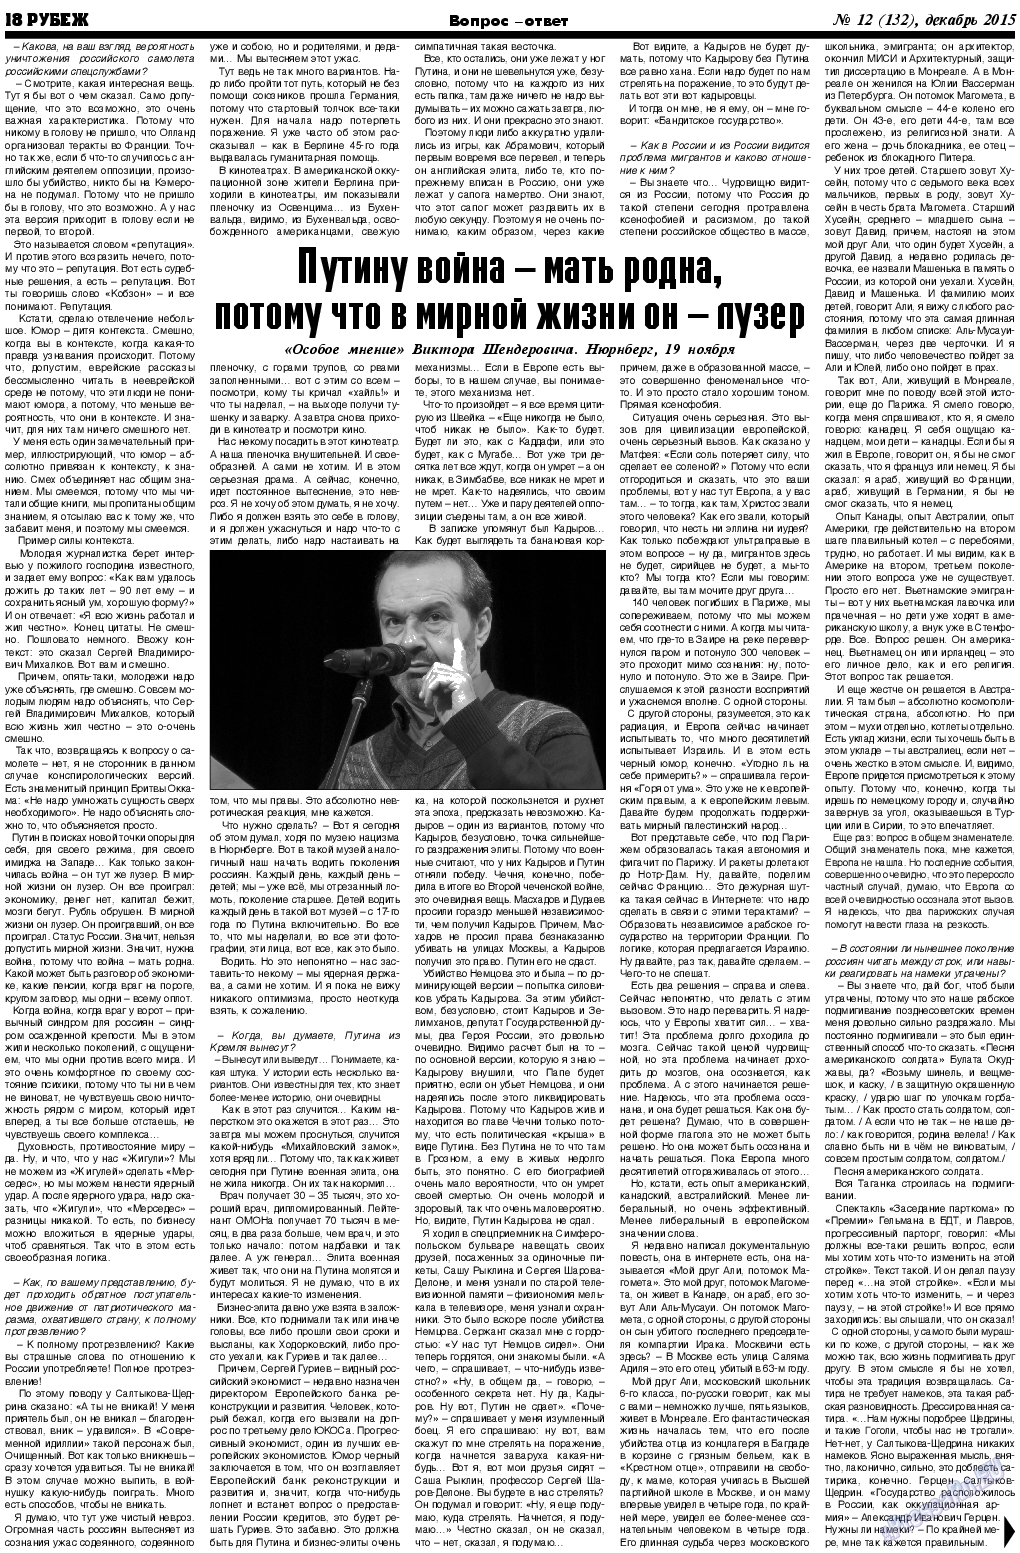 Рубеж, газета. 2015 №12 стр.18